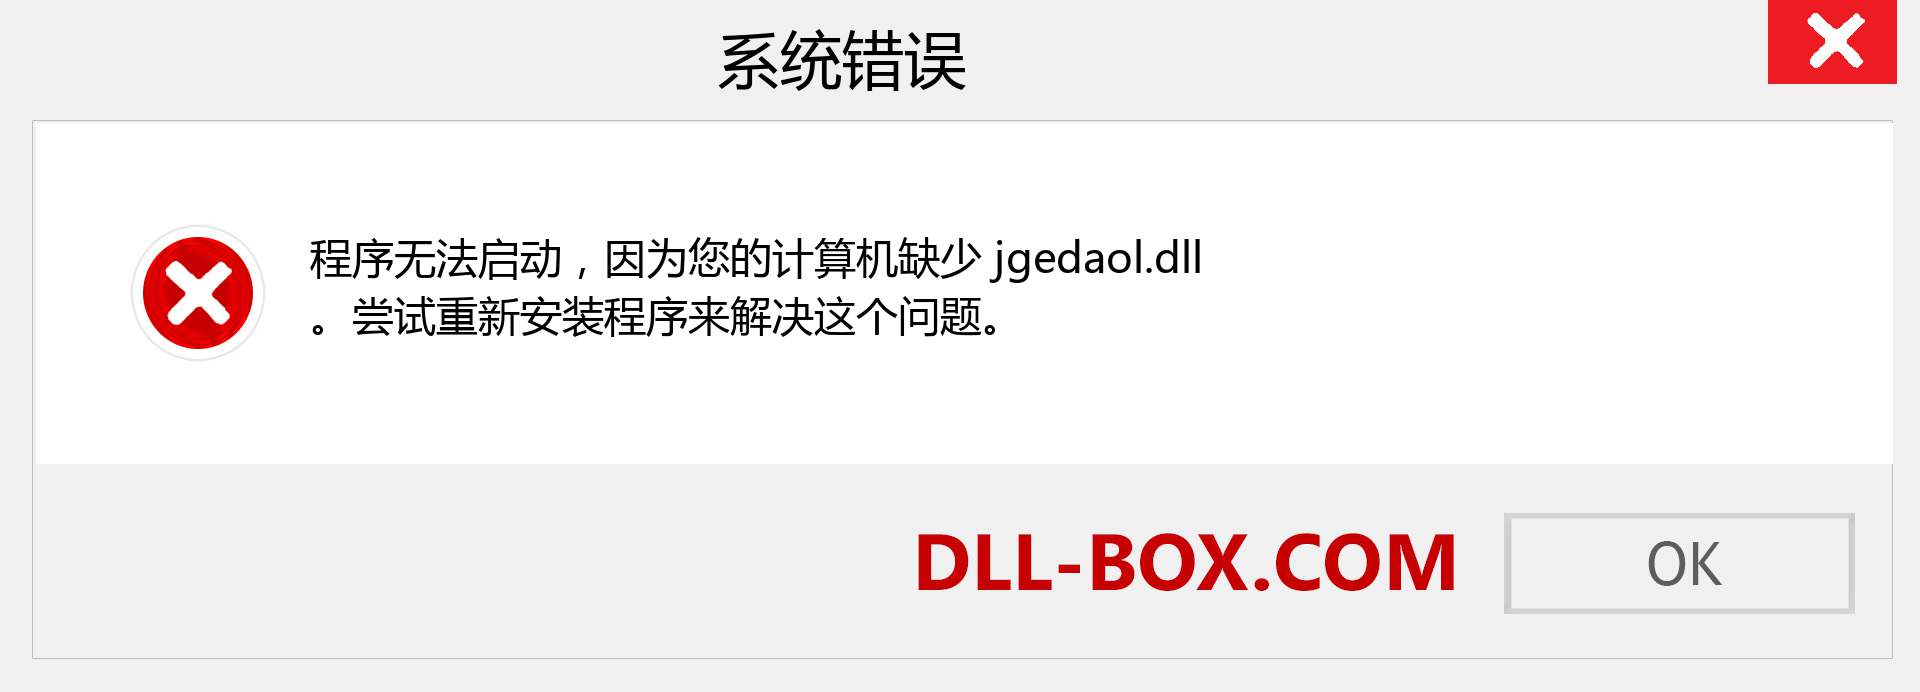 jgedaol.dll 文件丢失？。 适用于 Windows 7、8、10 的下载 - 修复 Windows、照片、图像上的 jgedaol dll 丢失错误